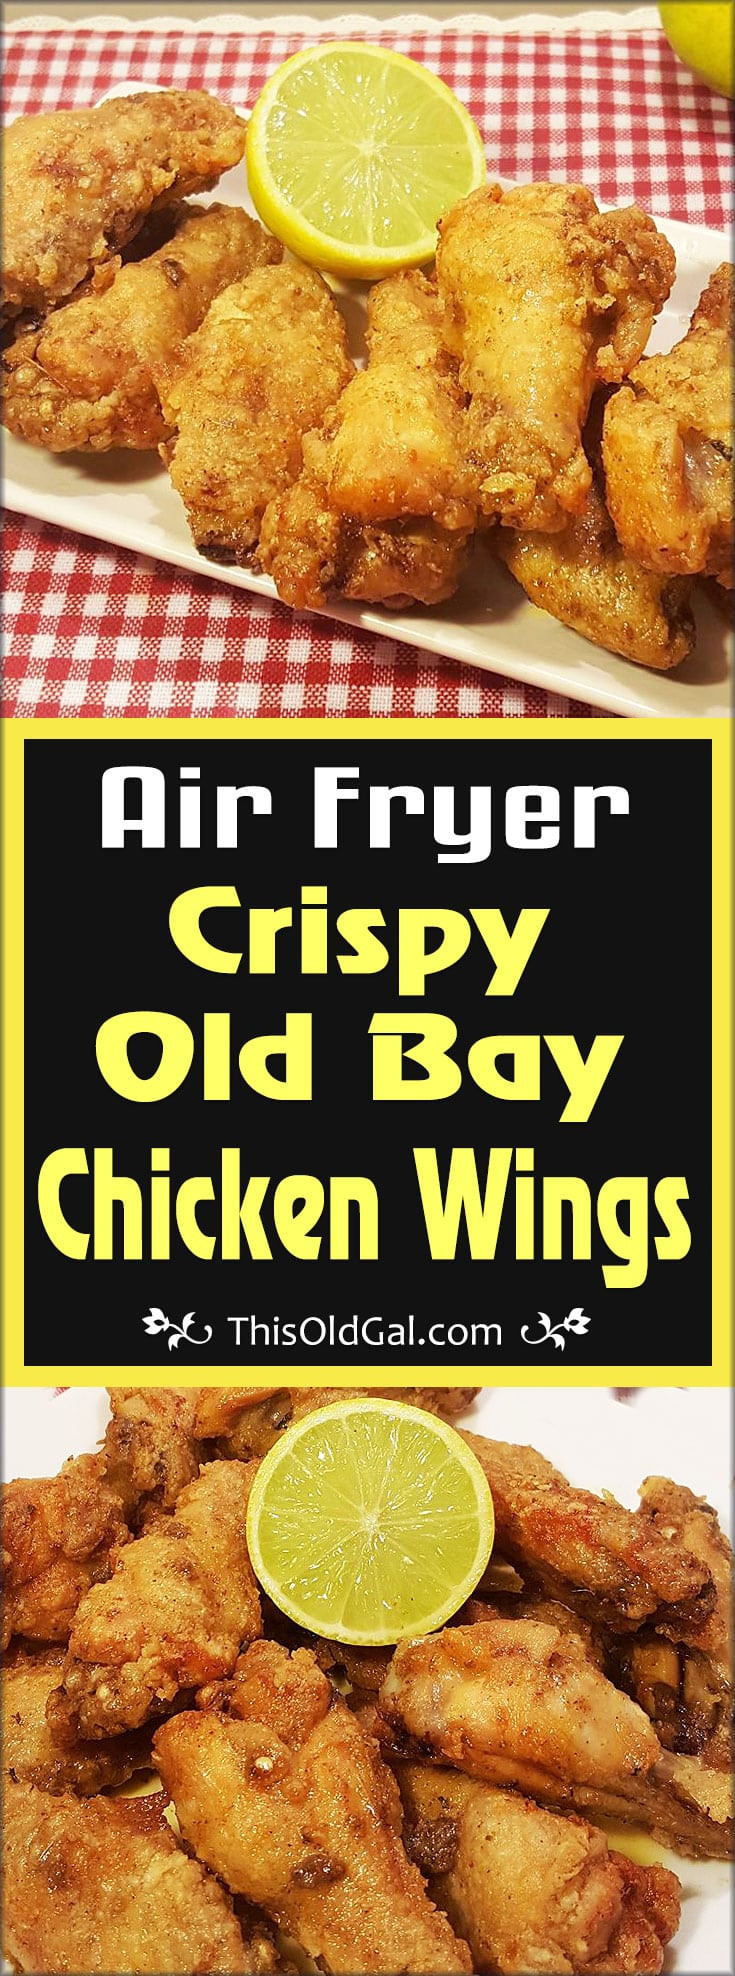 Old Bay Chicken Wings Air Fryer Crispy Old Bay Chicken Wings with Warm Lemon